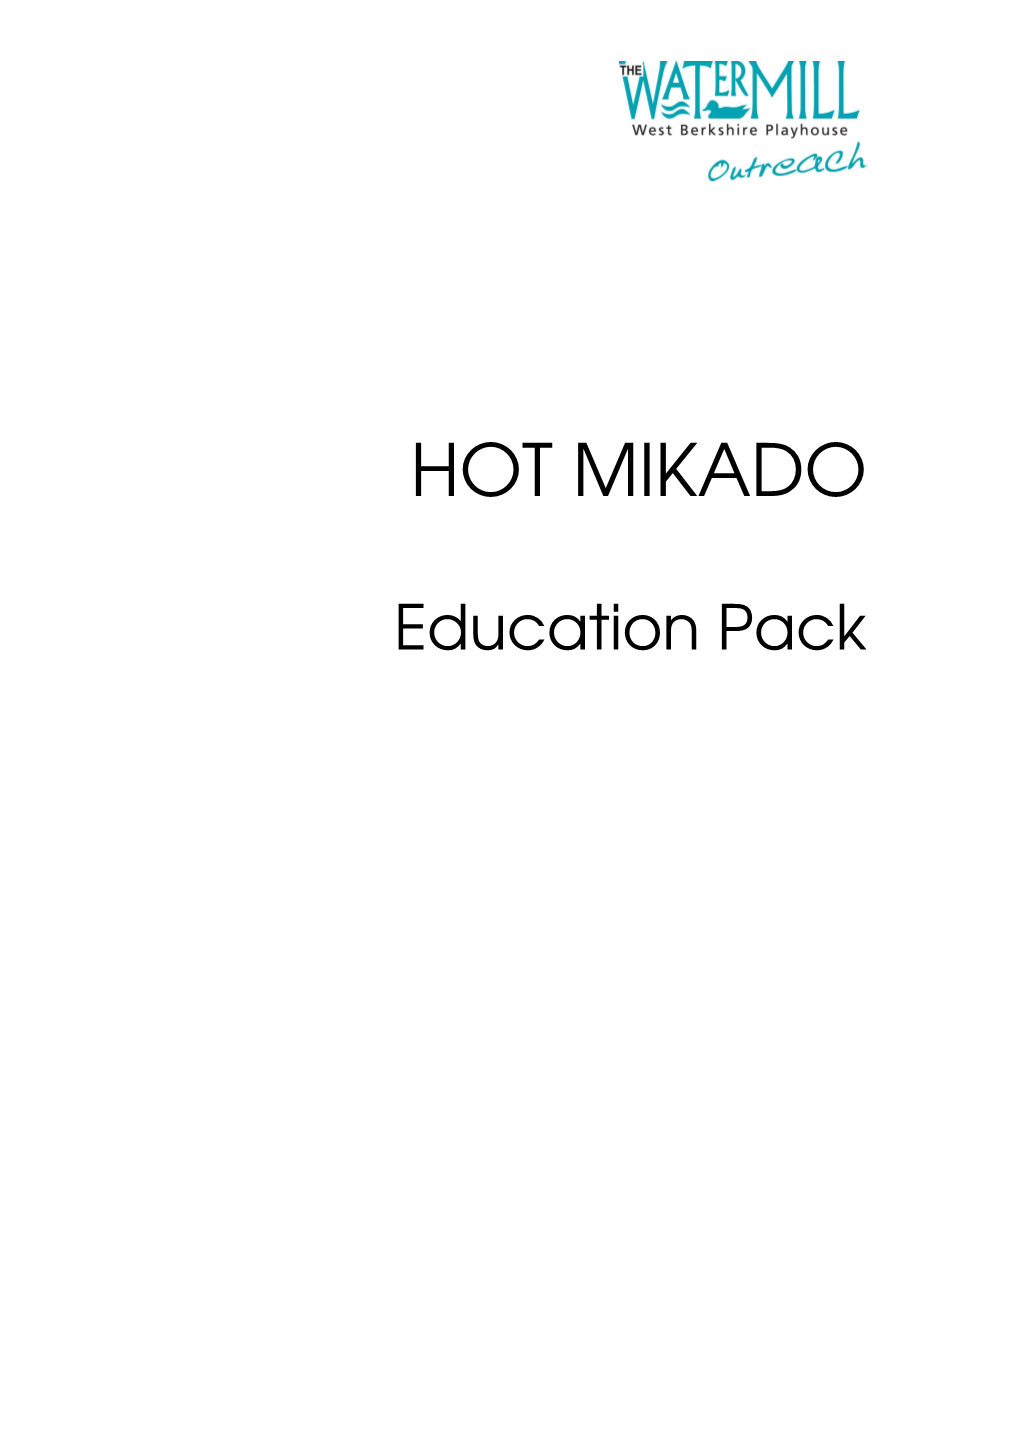 HOT MIKADO Education Pack